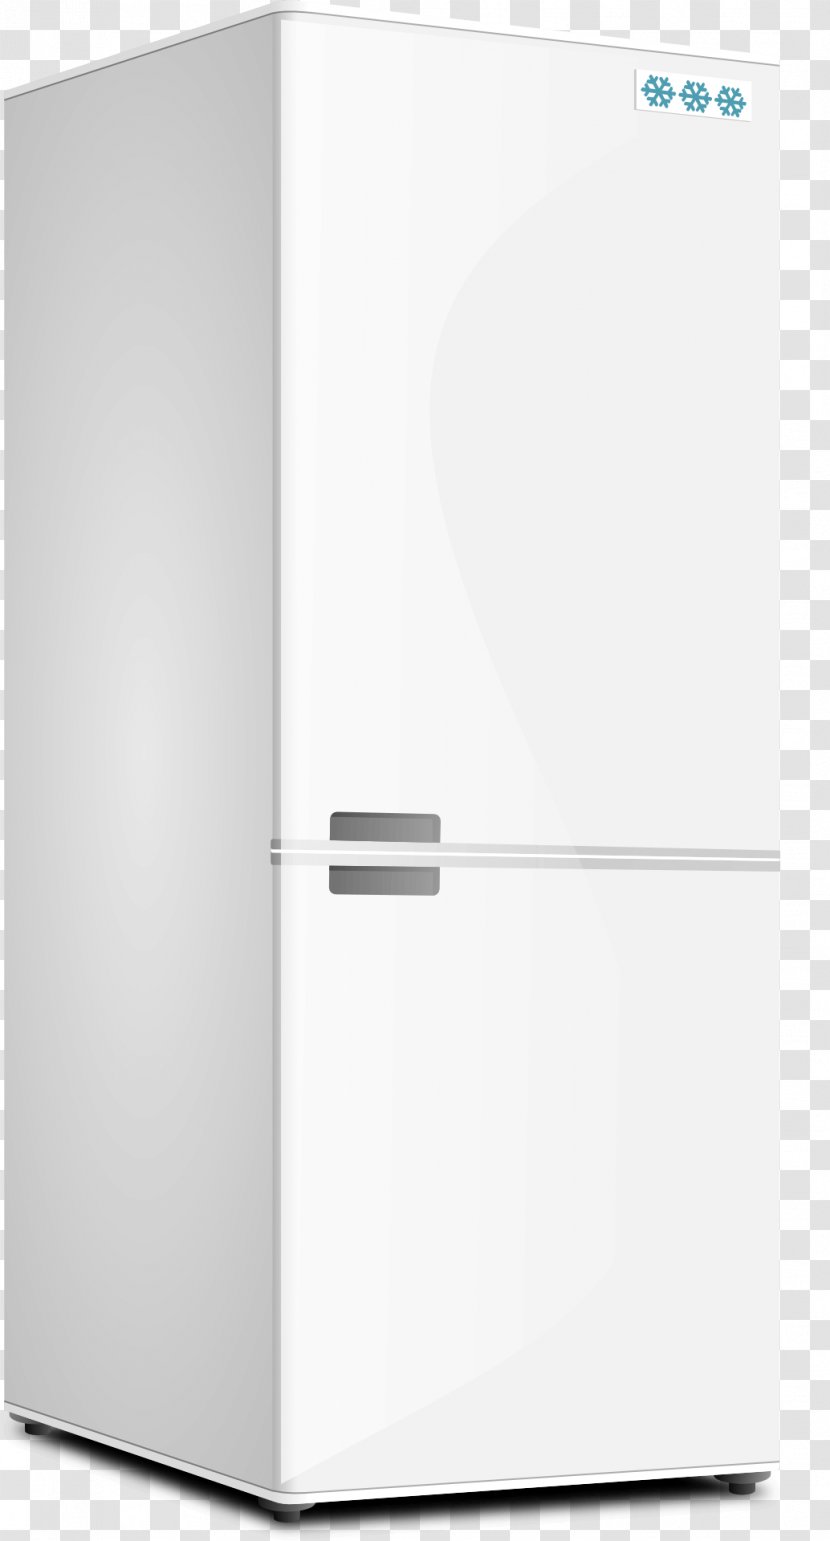 Refrigerator Home Appliance Freezers Dishwasher Washing Machines - Air Conditioning - Mini Fridge Transparent PNG